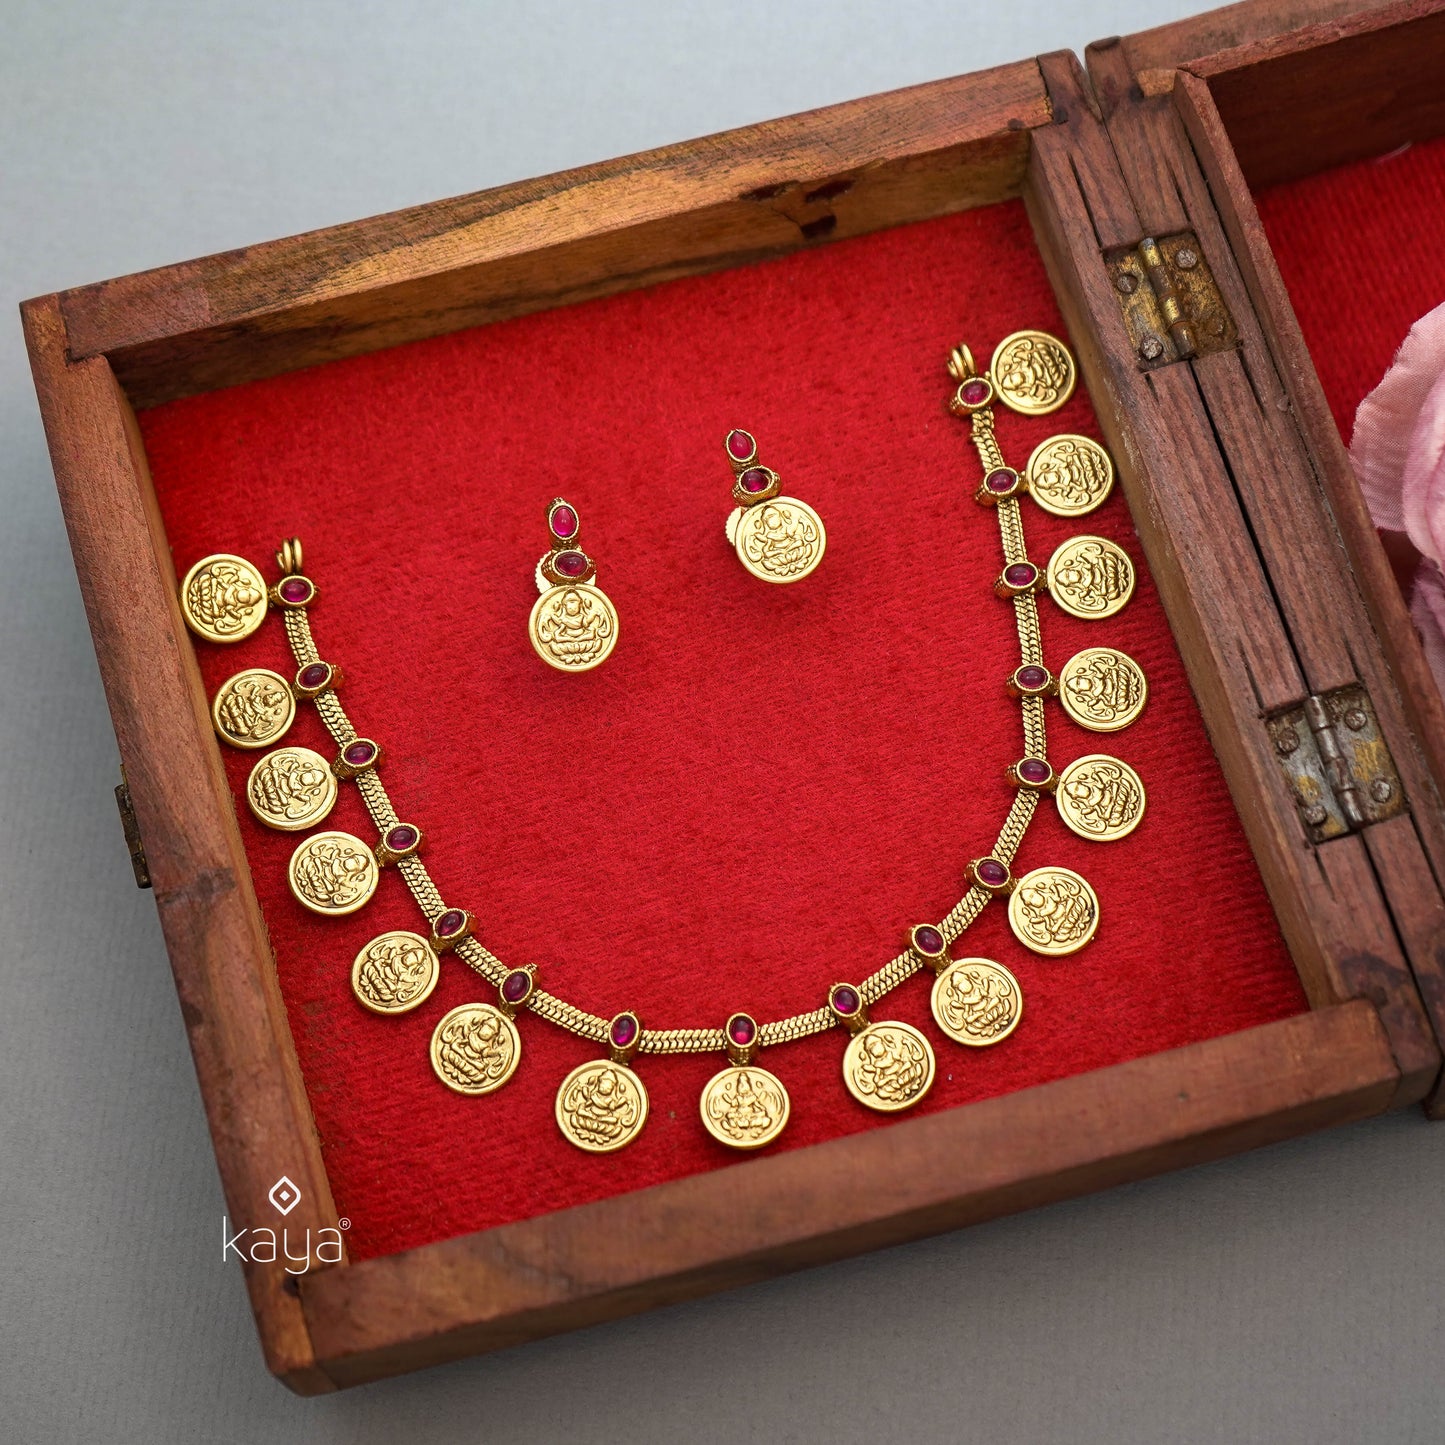 NV101234 - Antique Necklace Lakshmi Coin with Earring Set(color option)